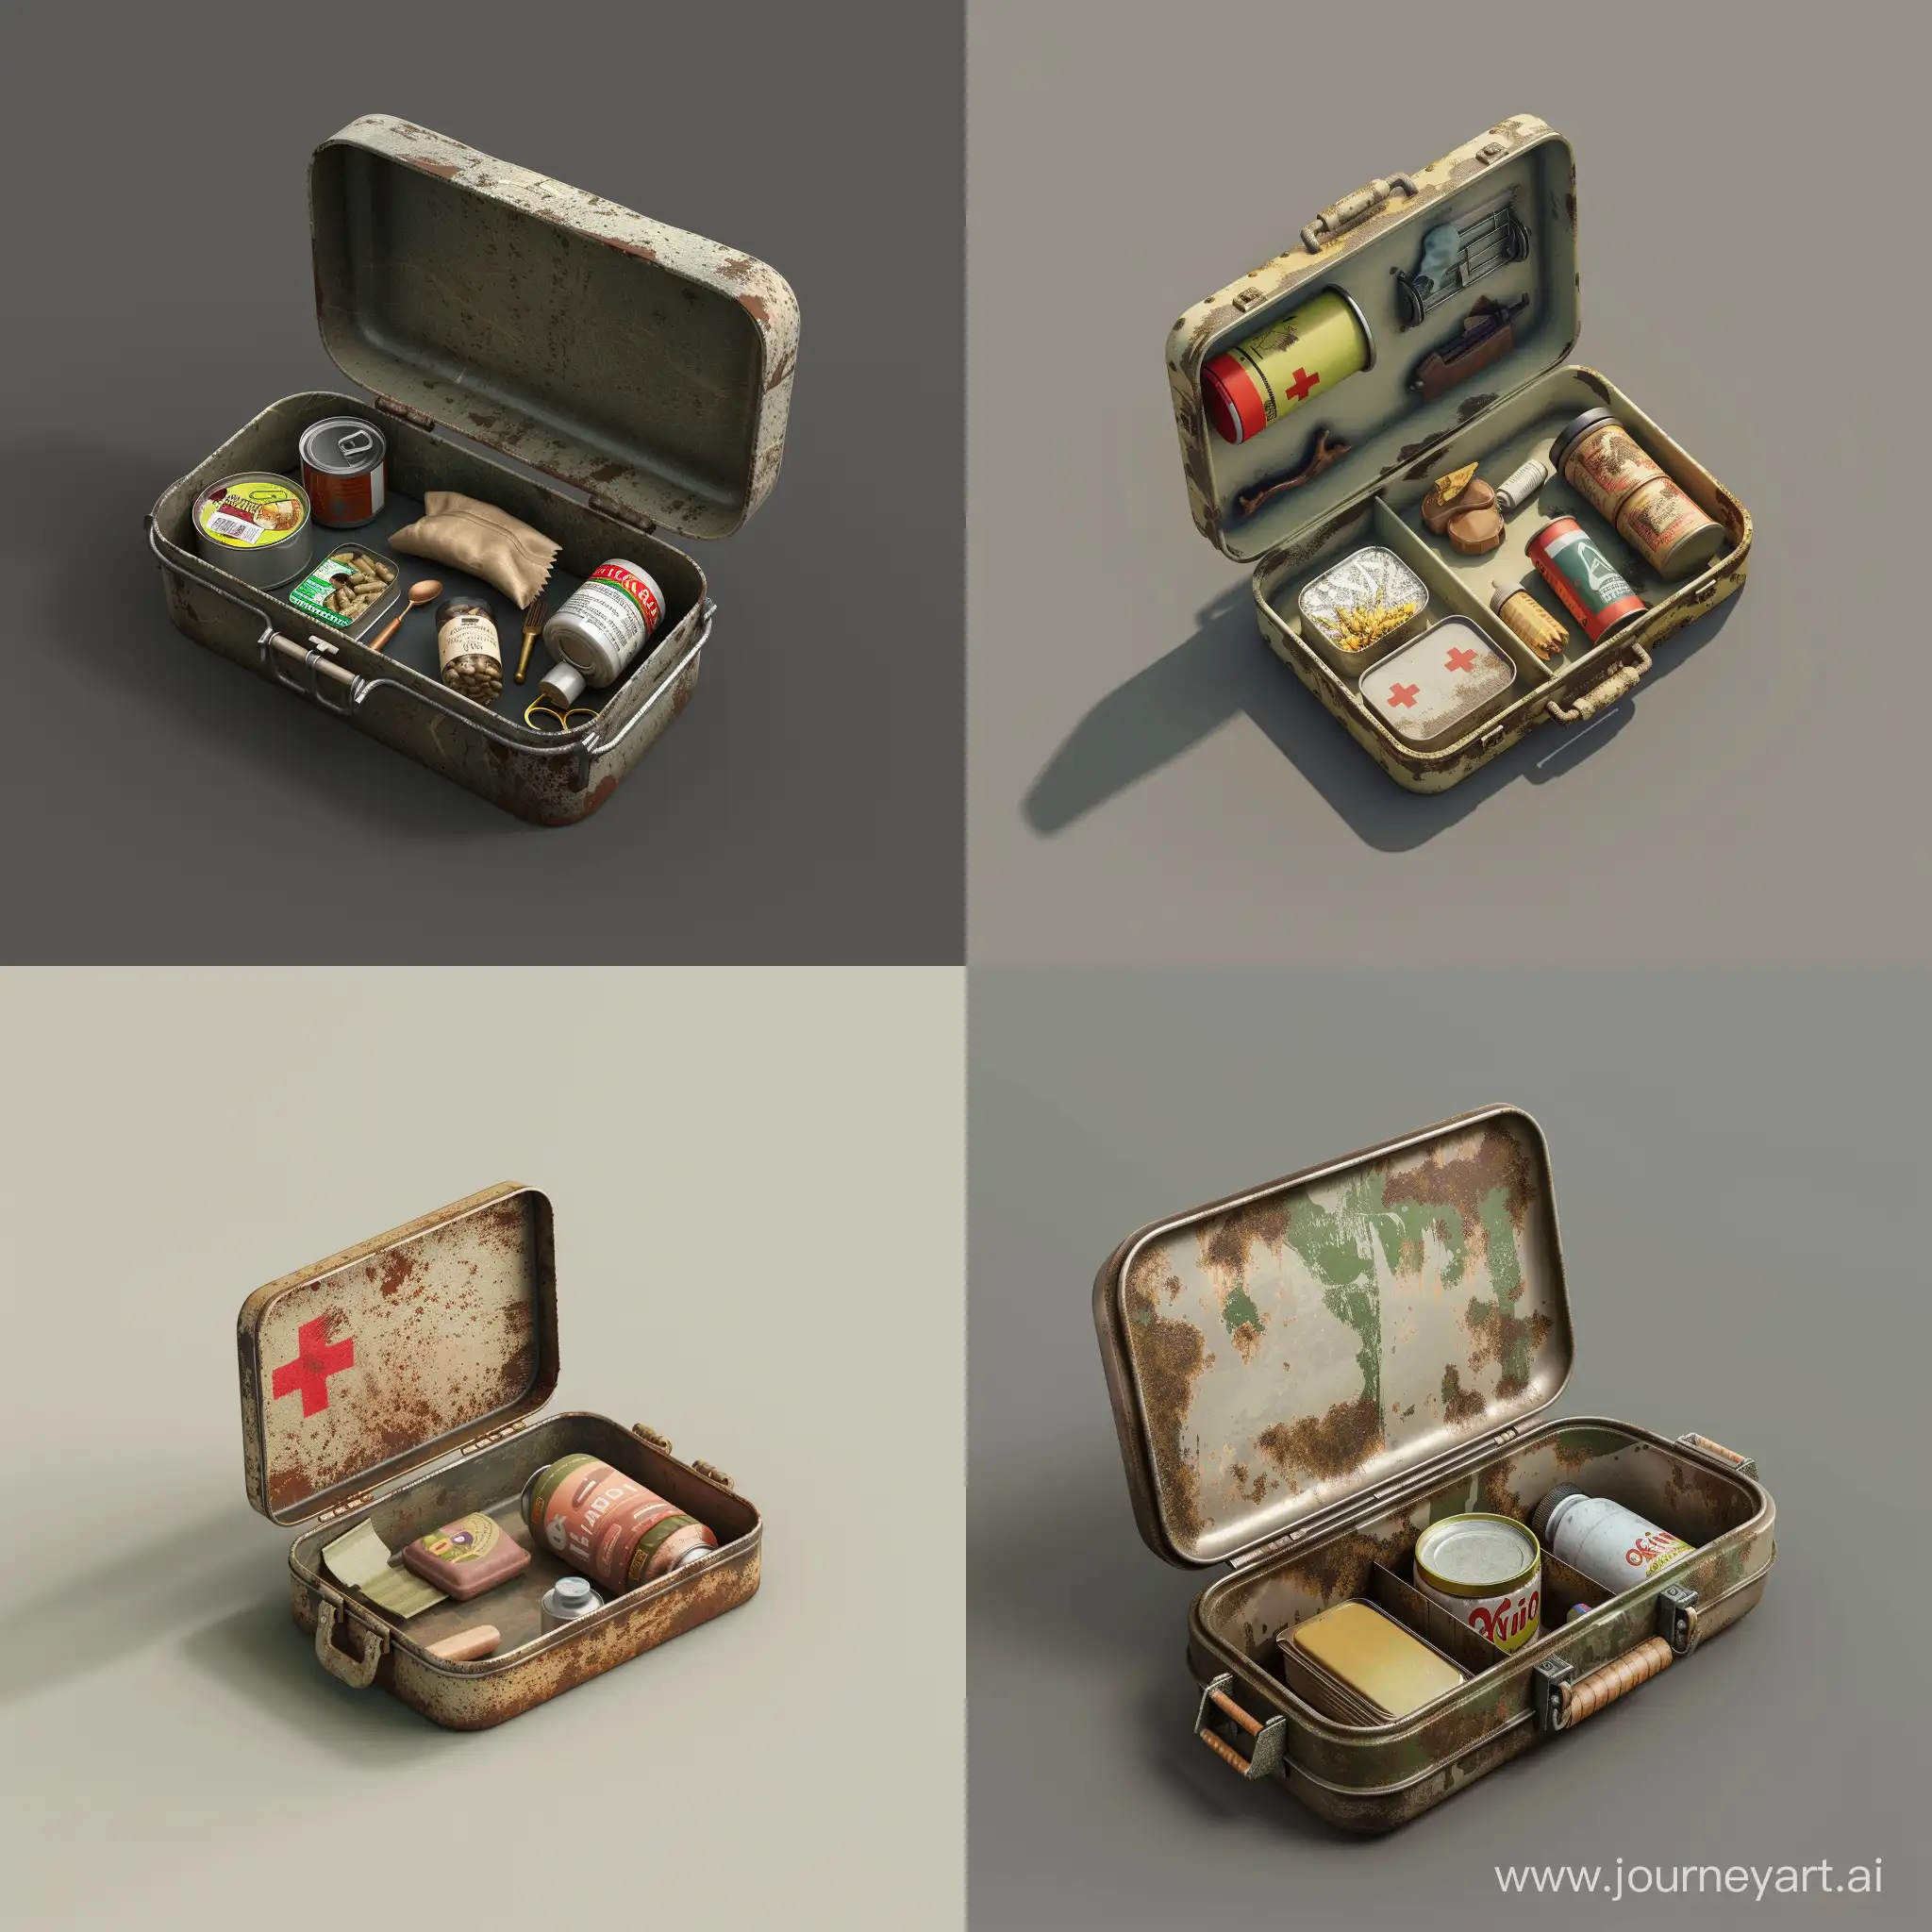 Isometric-Realistic-Mini-Survival-Kit-in-Worn-Metal-Case-Stalker-Style-3D-Render